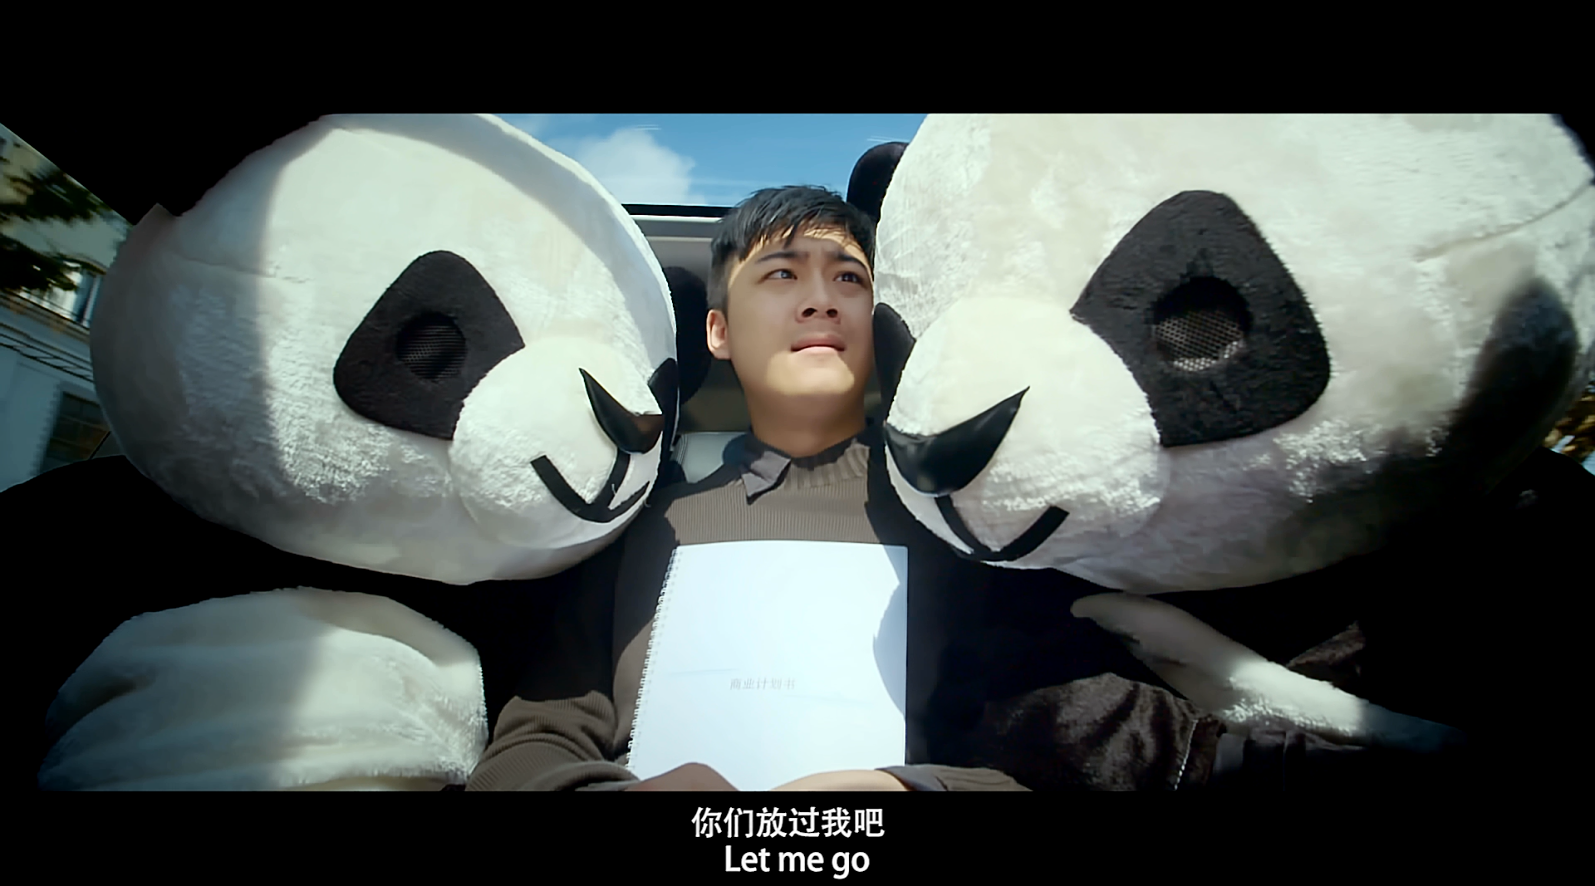 VISION-熊猫资本 创意广告 